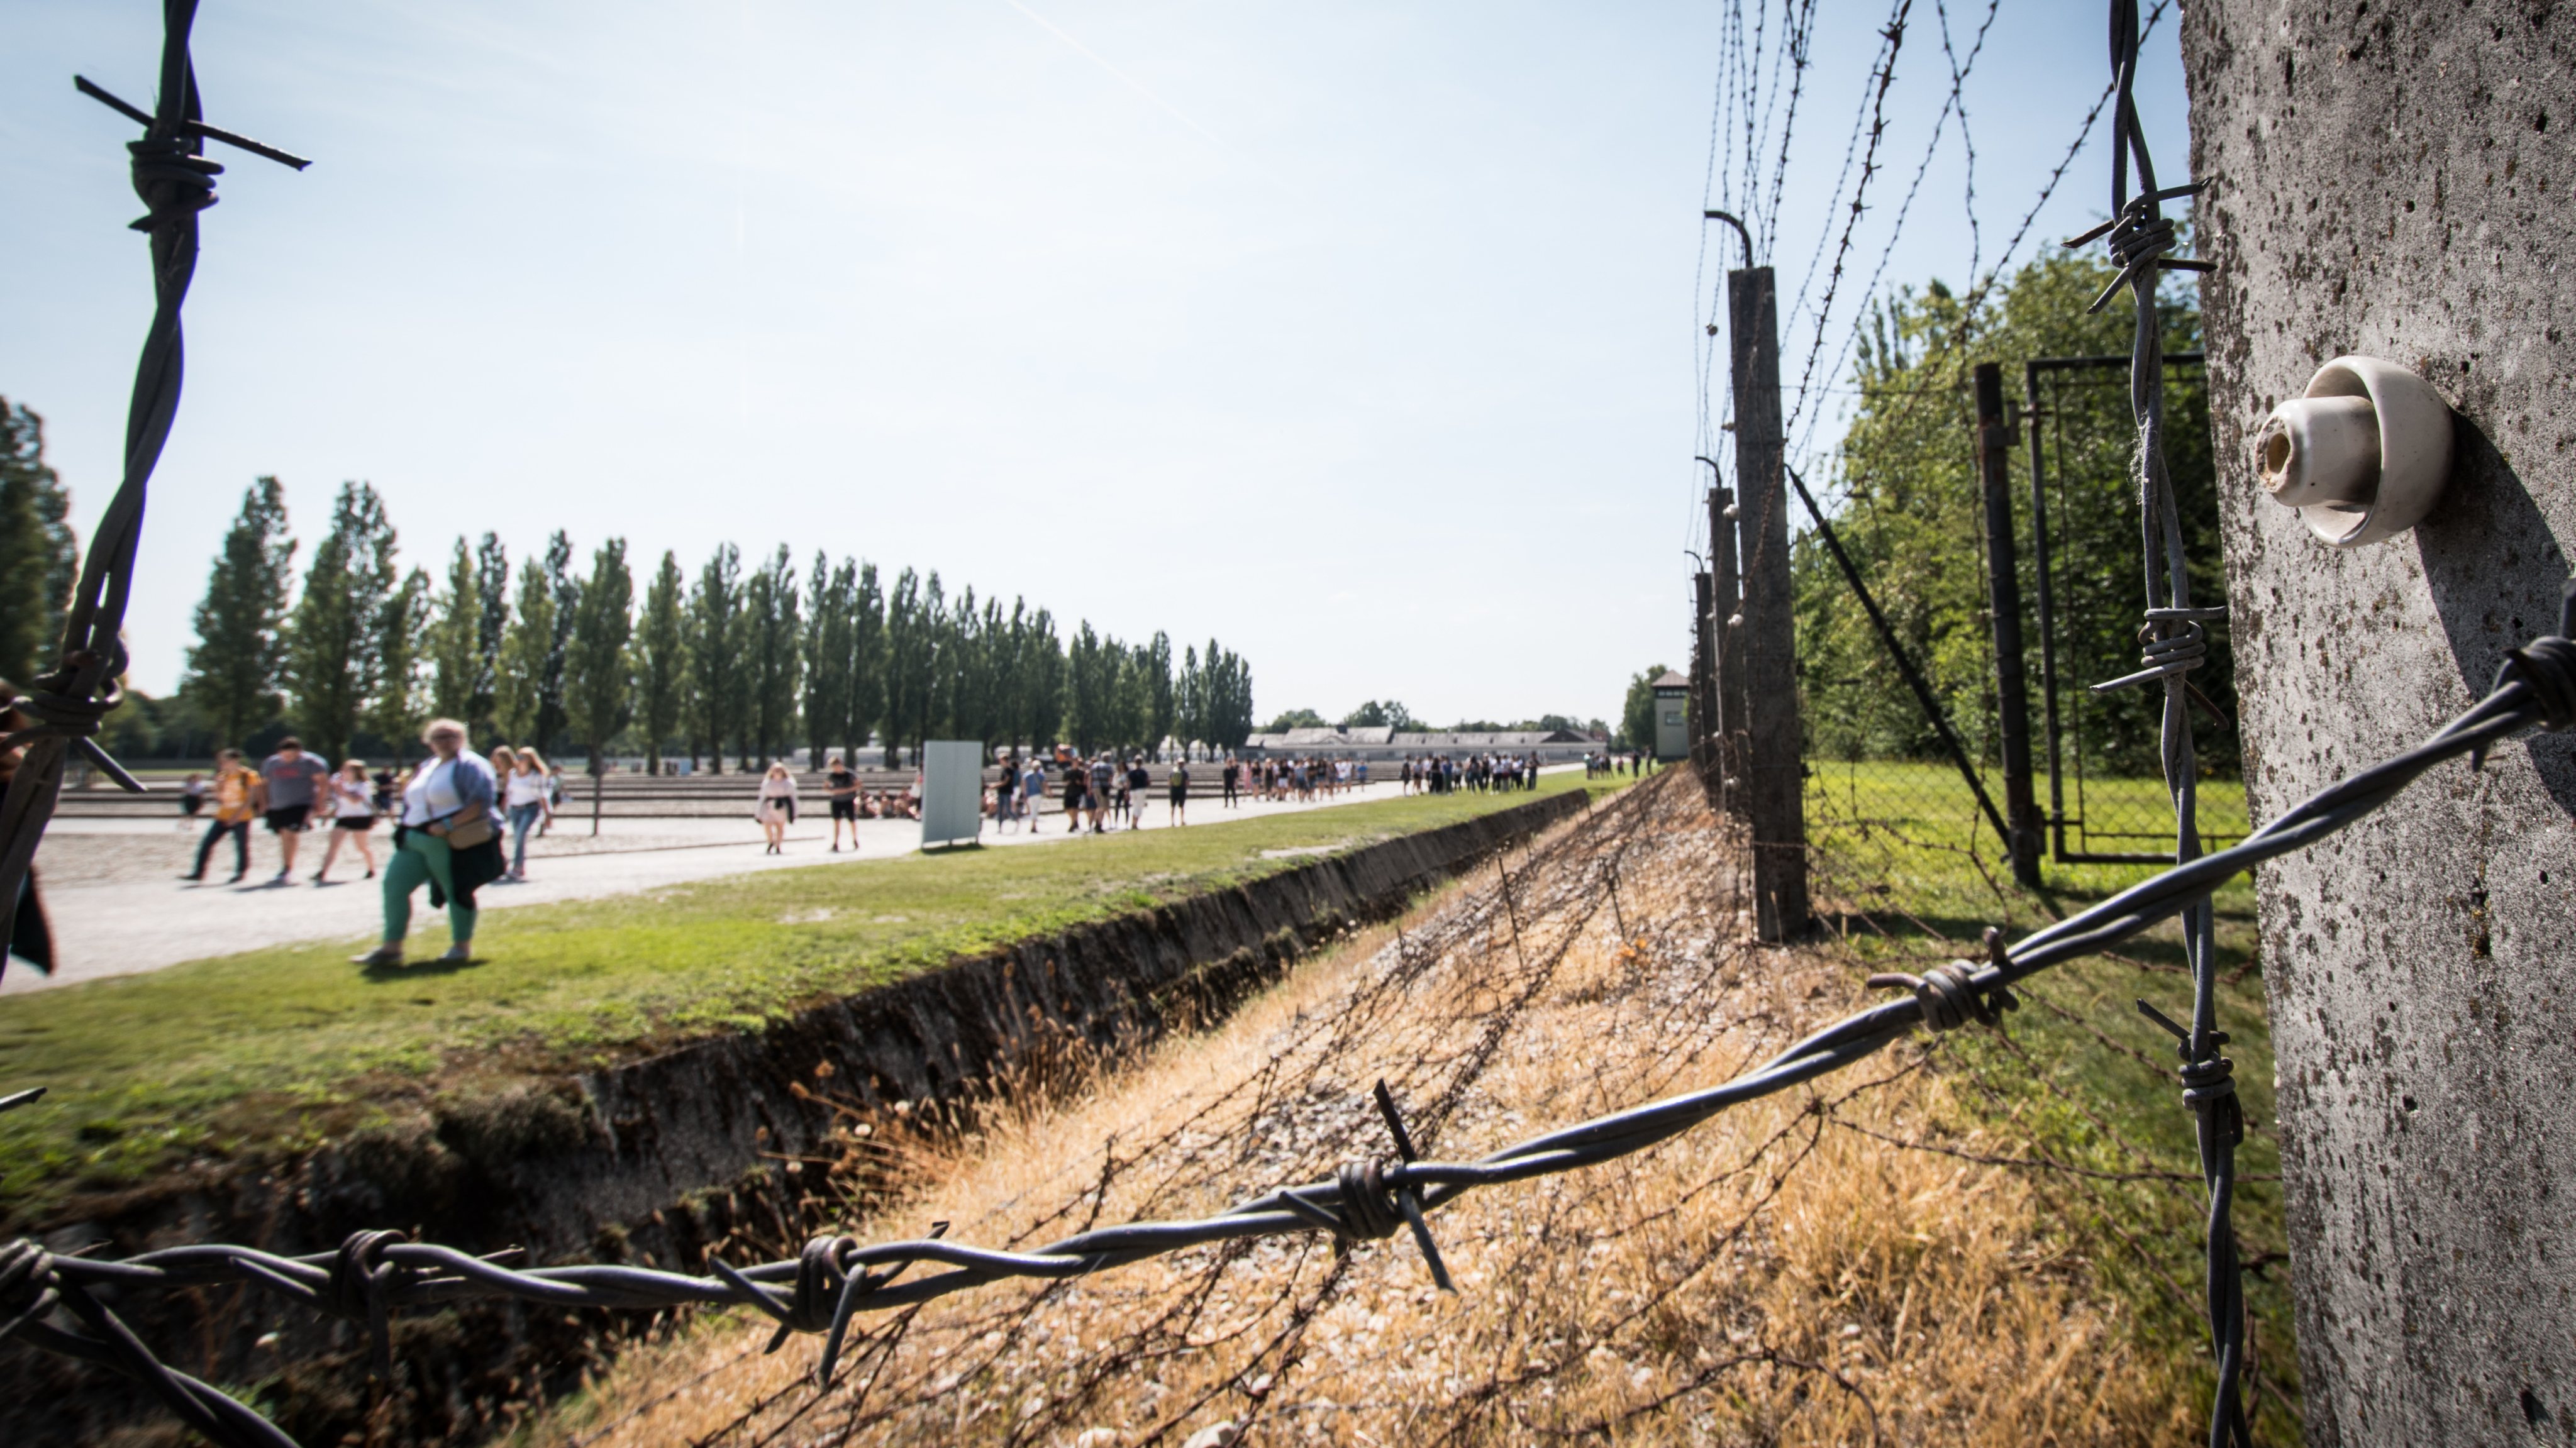 The Dachau Commemorative Museum